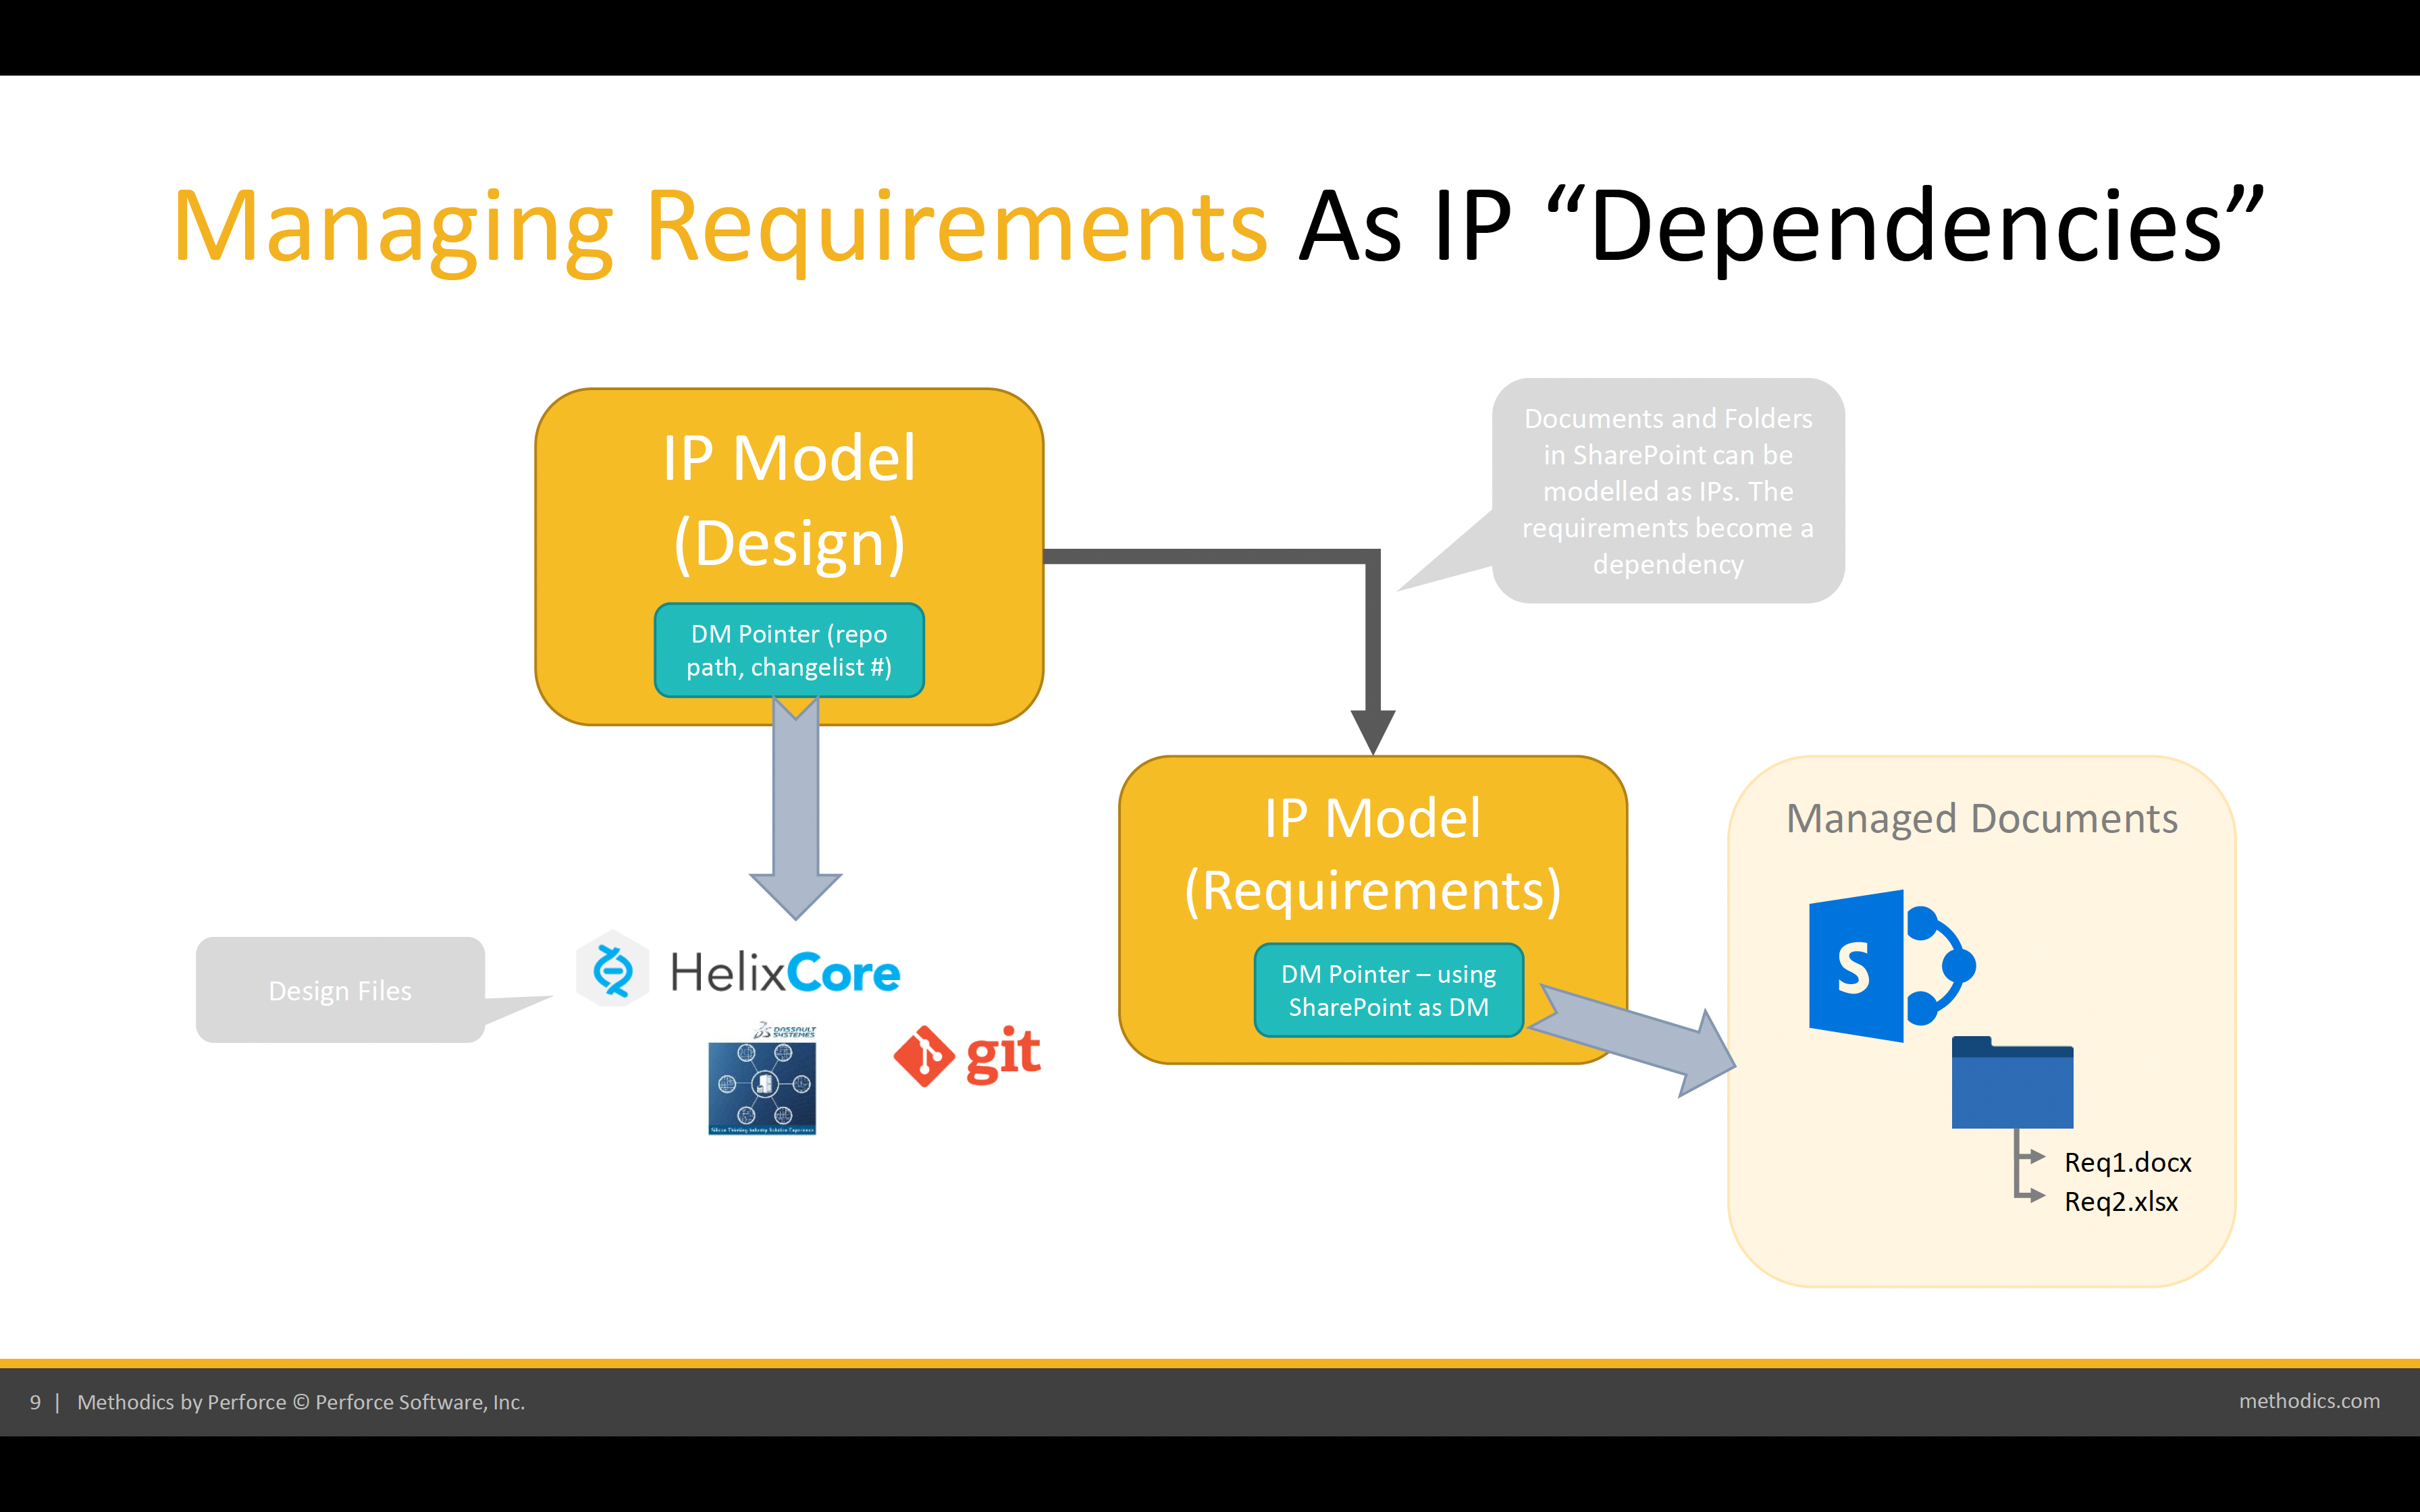 Managing Requirements as IP Dependencies